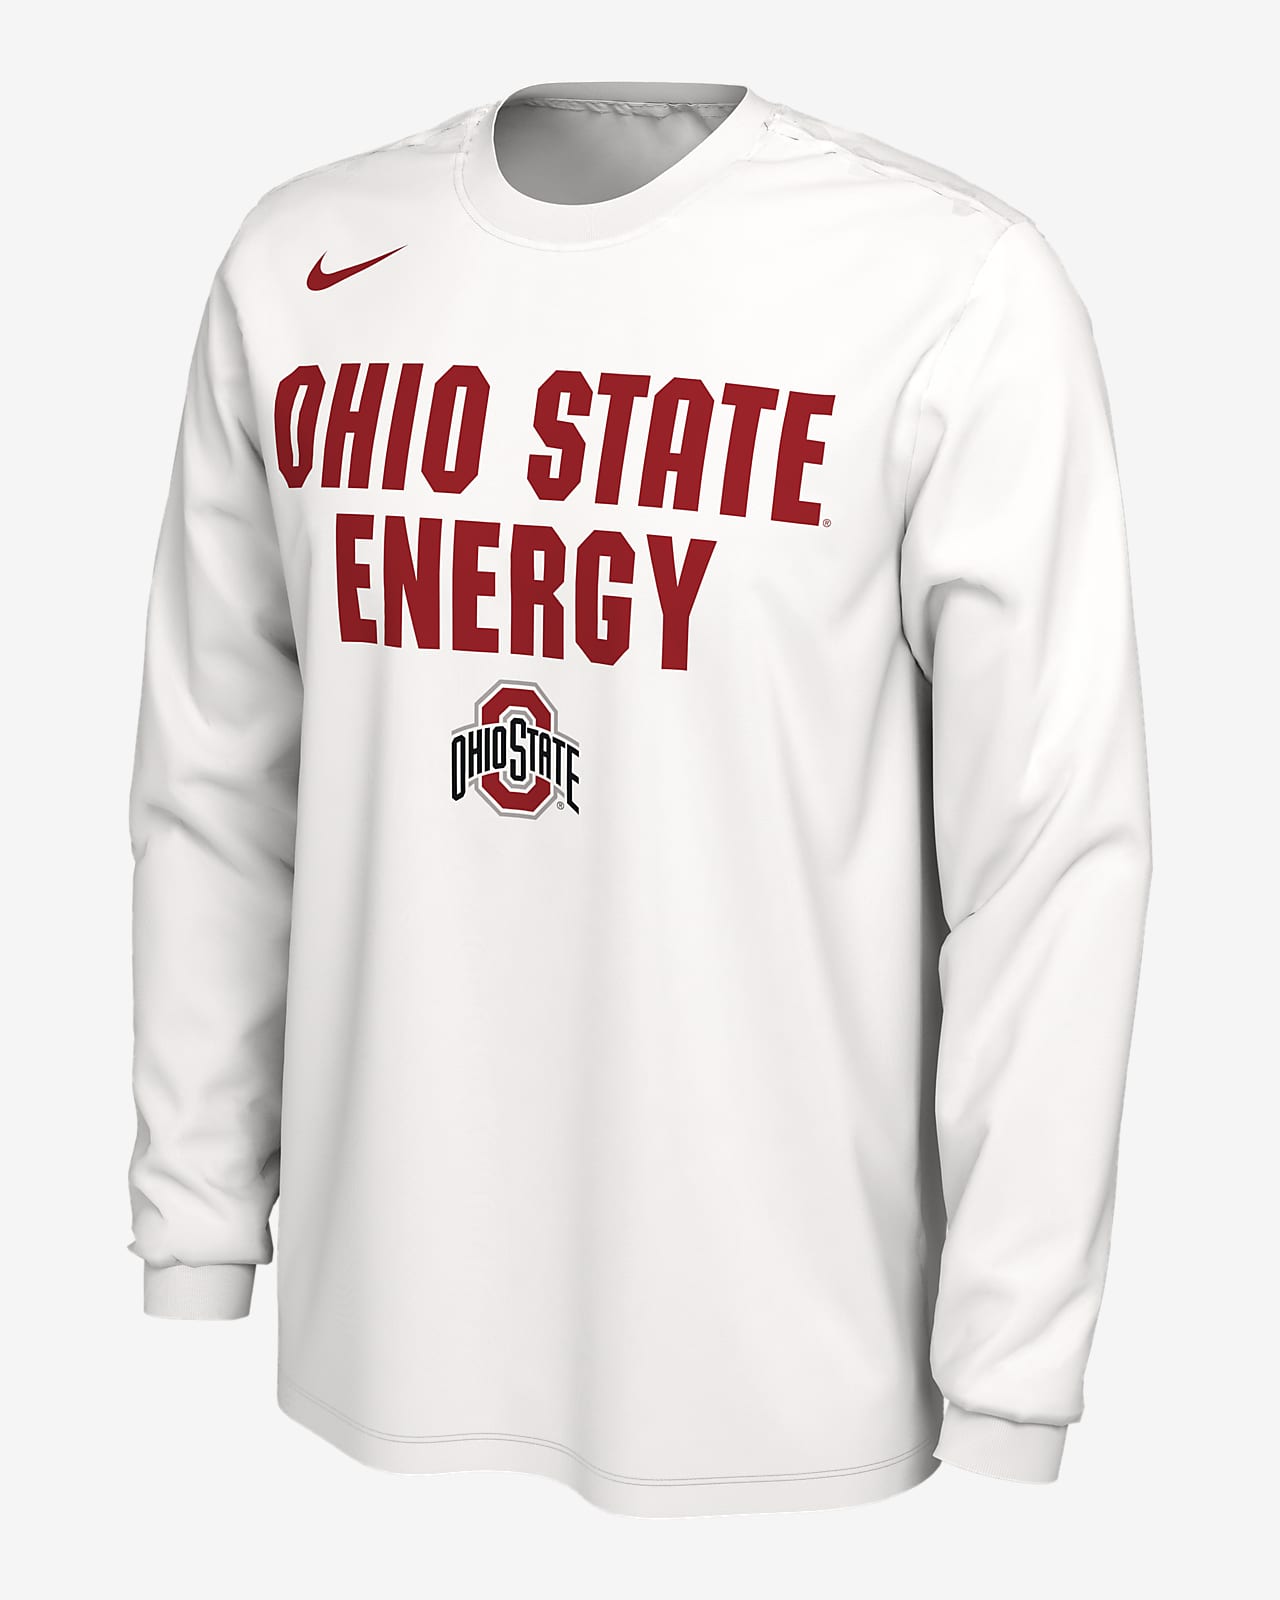 Ohio State Men's Nike College Long-Sleeve T-Shirt